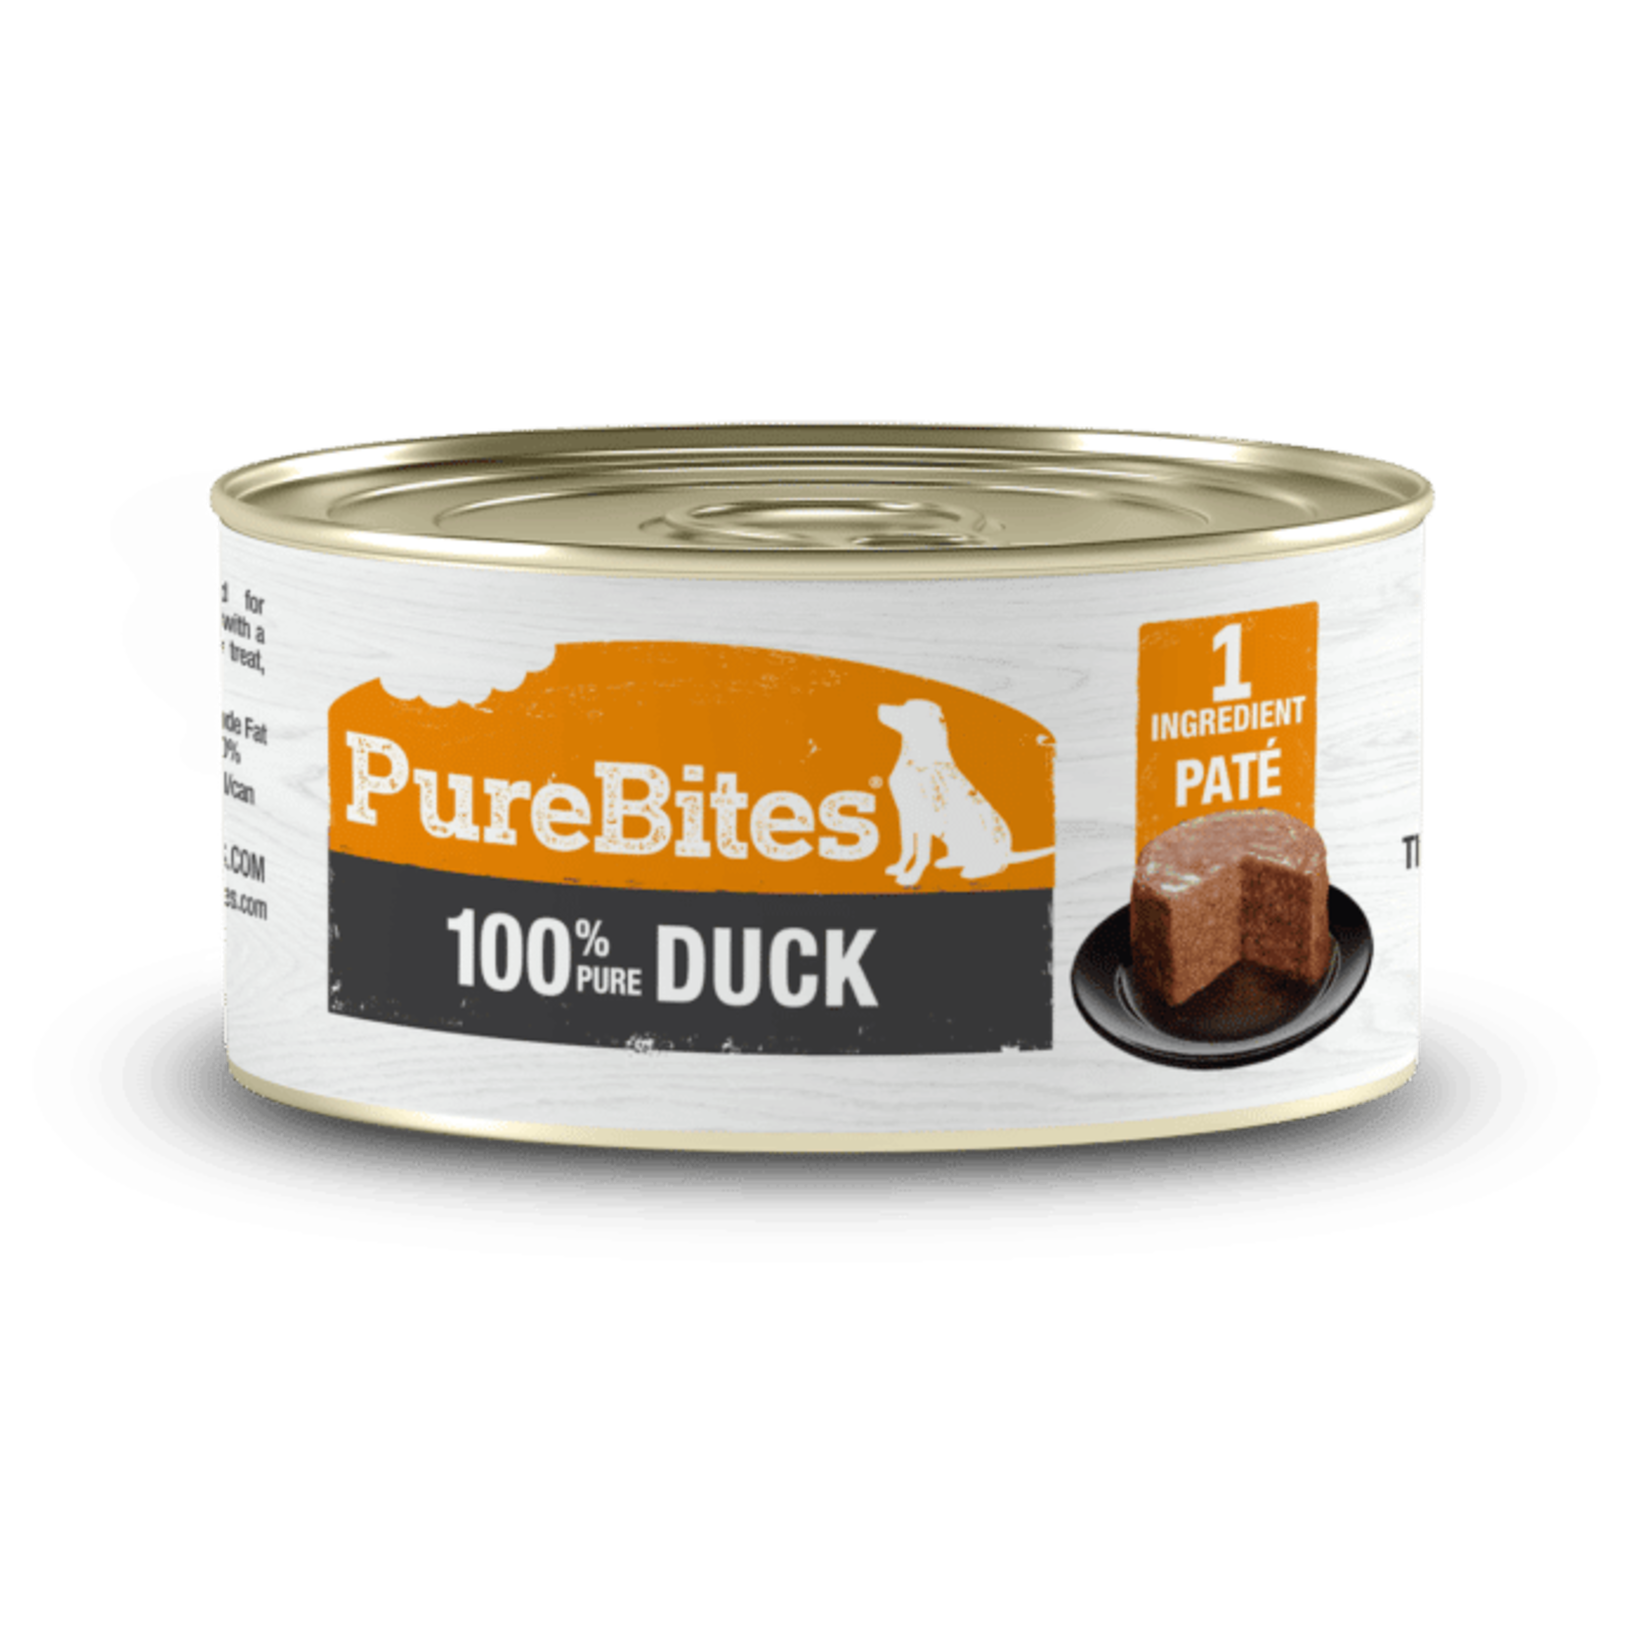 PureBites Purebite Paté 100% pure Canard 2.5 oz